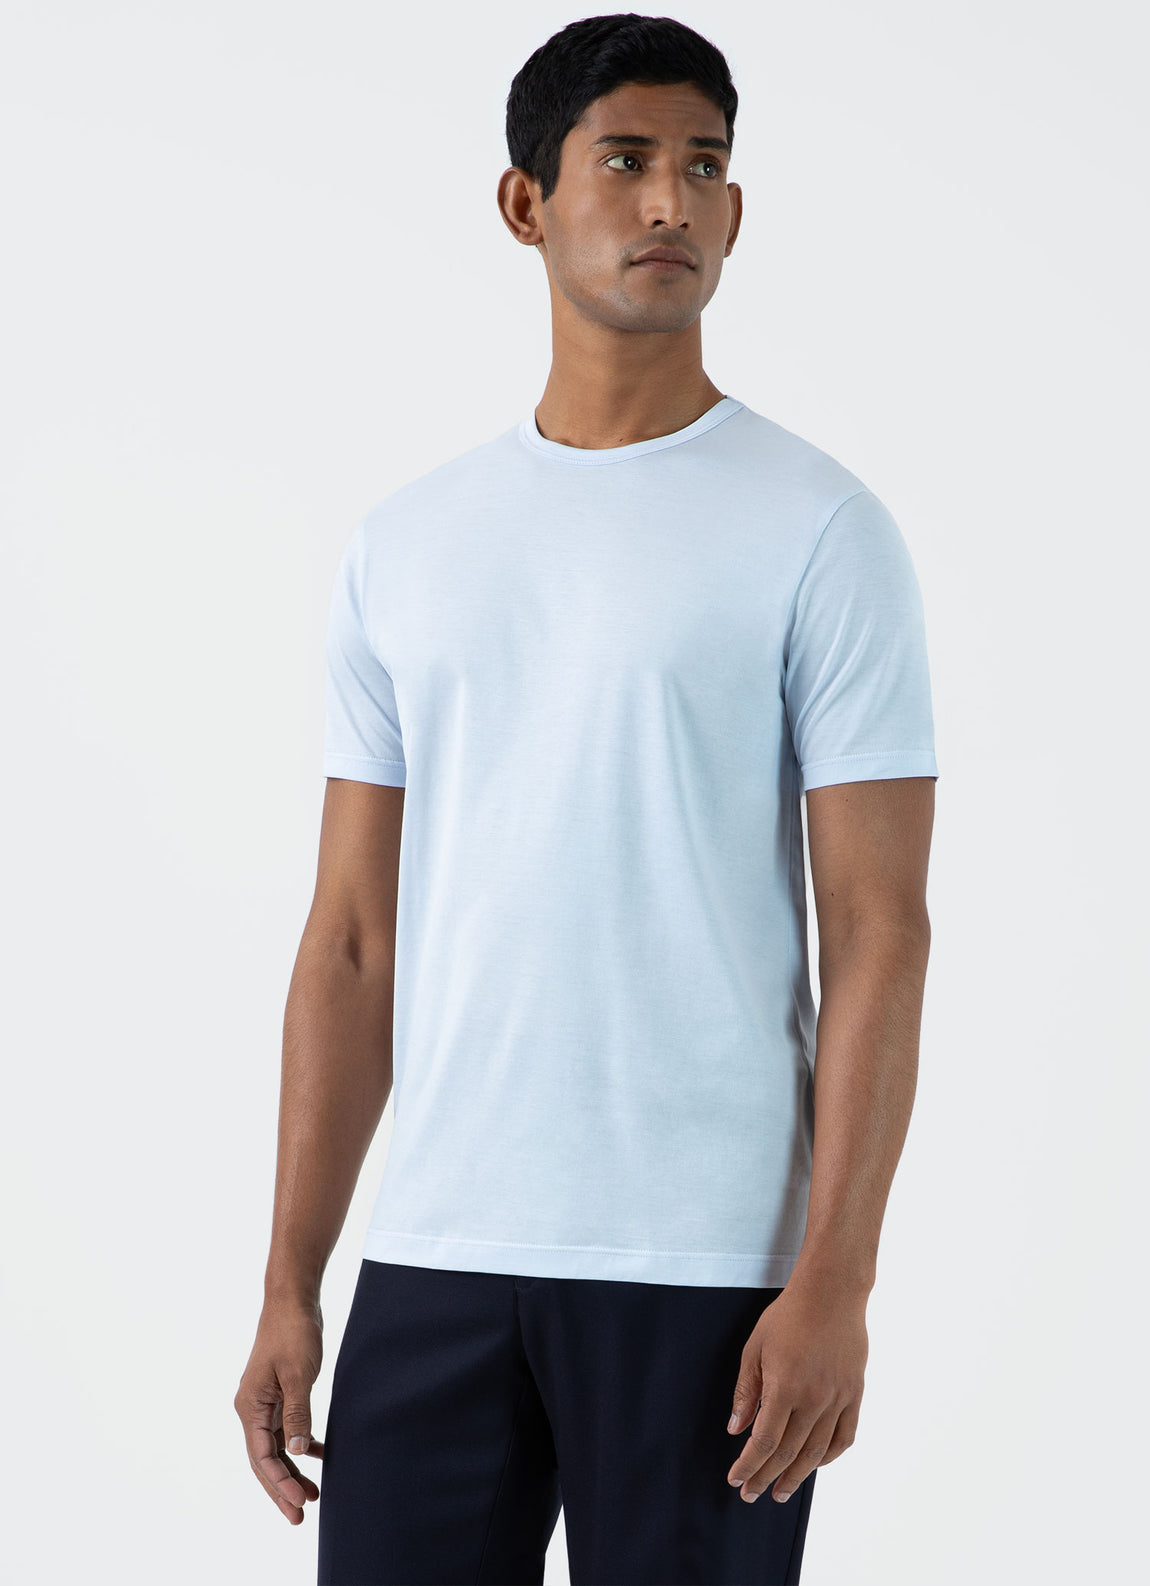 Men's Classic T-shirt in Light Blue | Sunspel